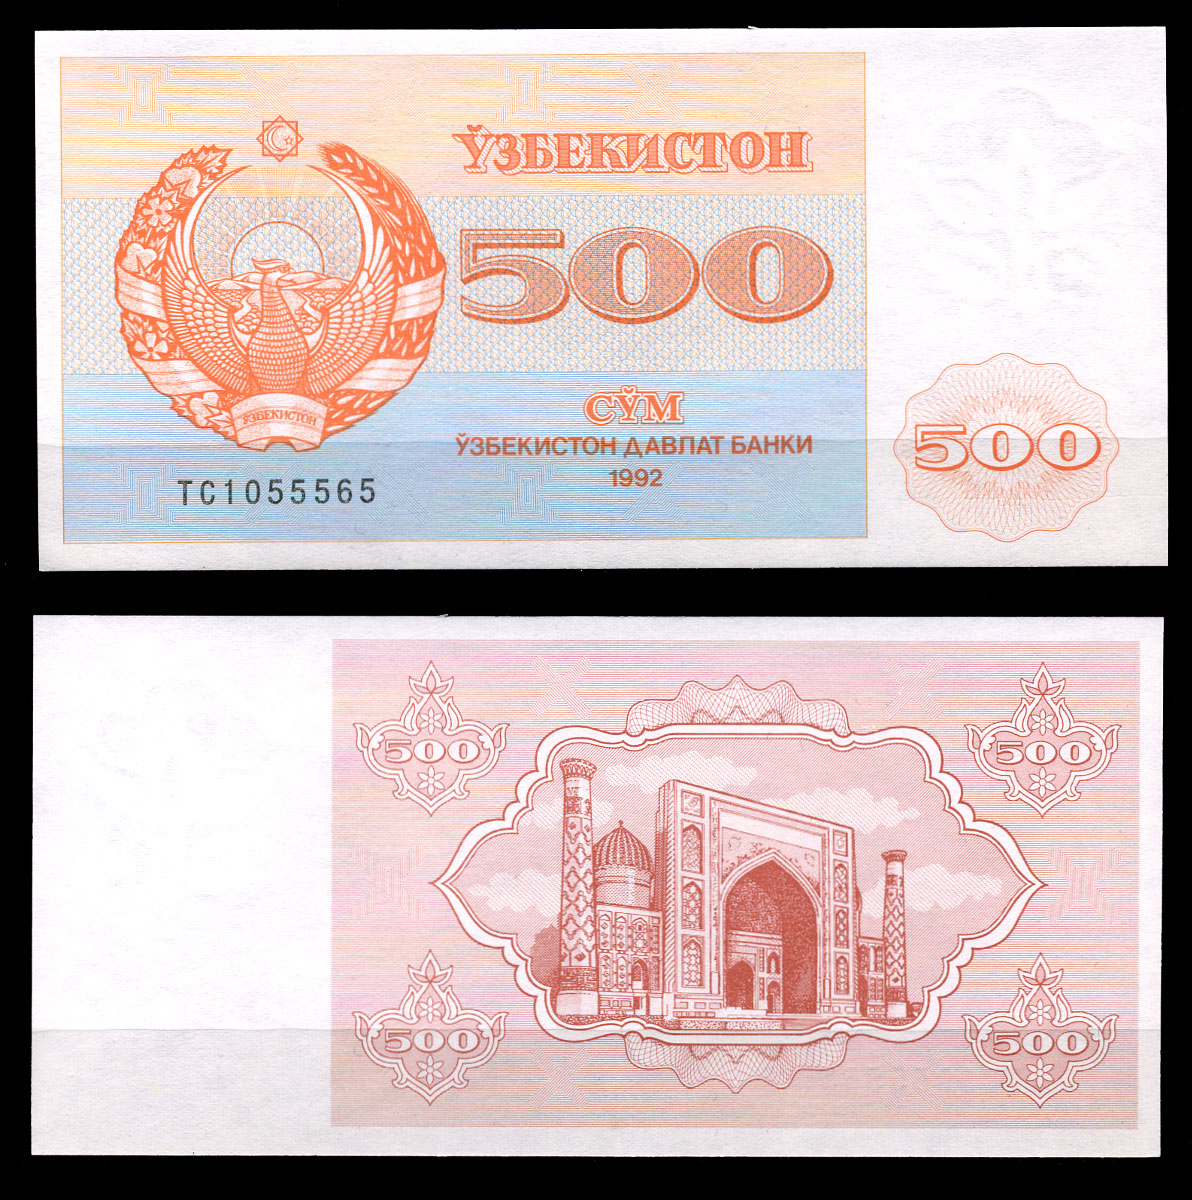 Узбекский сом сколько рублей. Узбекский сум. Сом валюта Узбекистана. Купюра 100 сум Узбекистан. Som валюта Узбекистана.